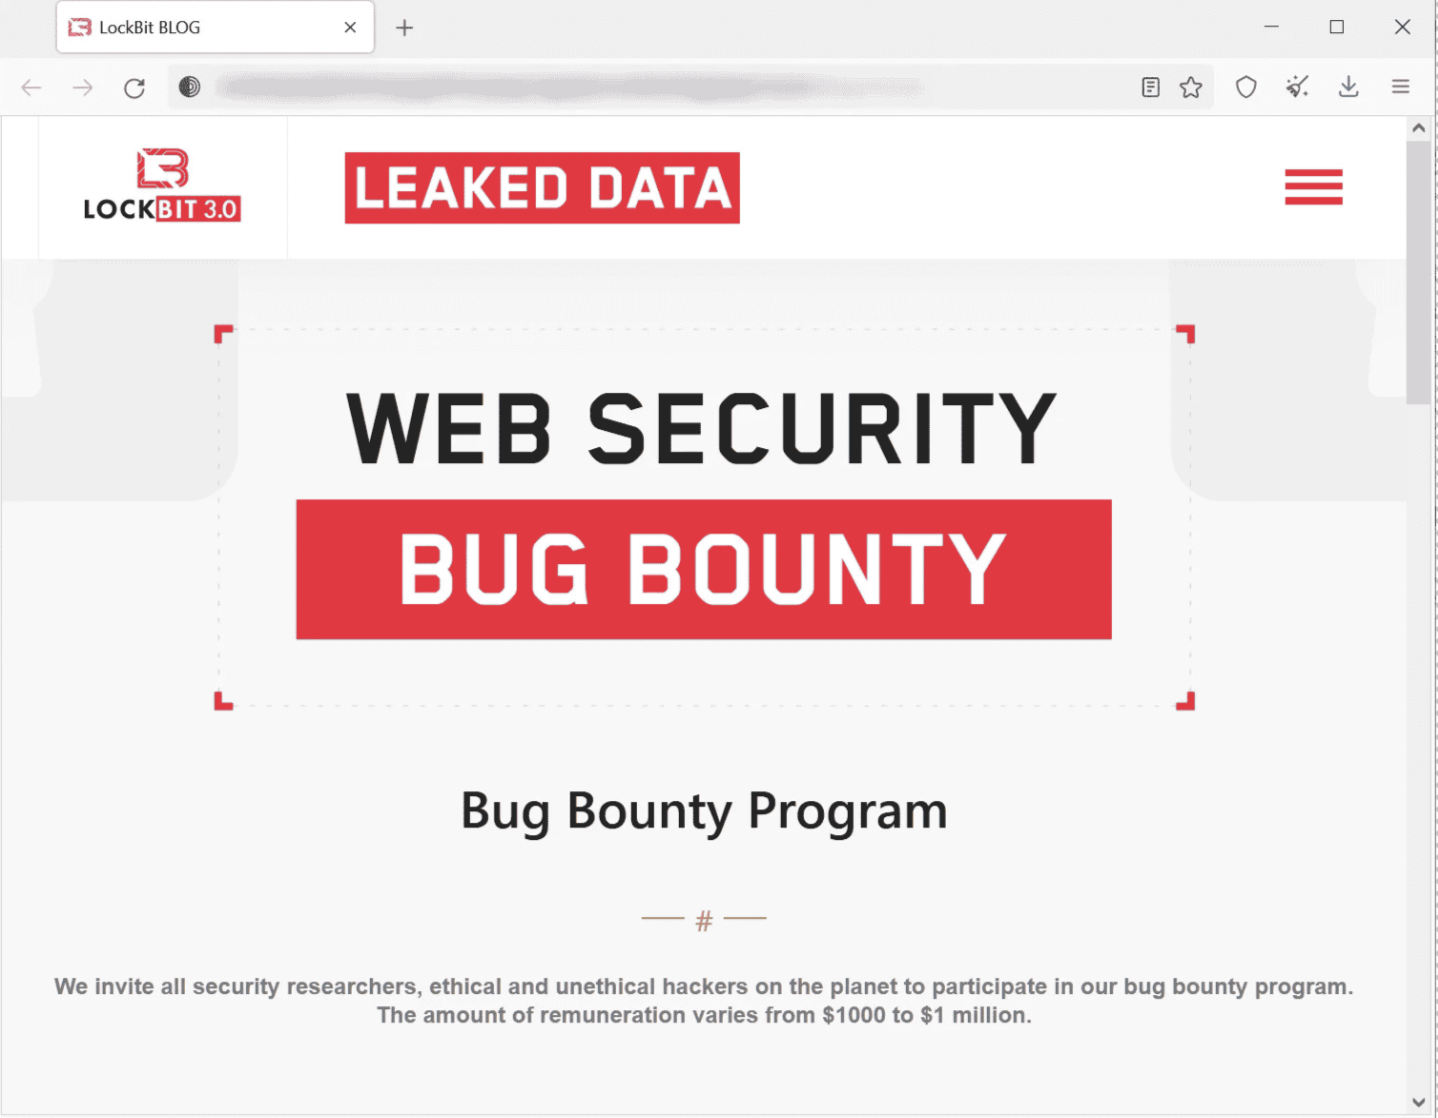 LockBit's bug bounty program